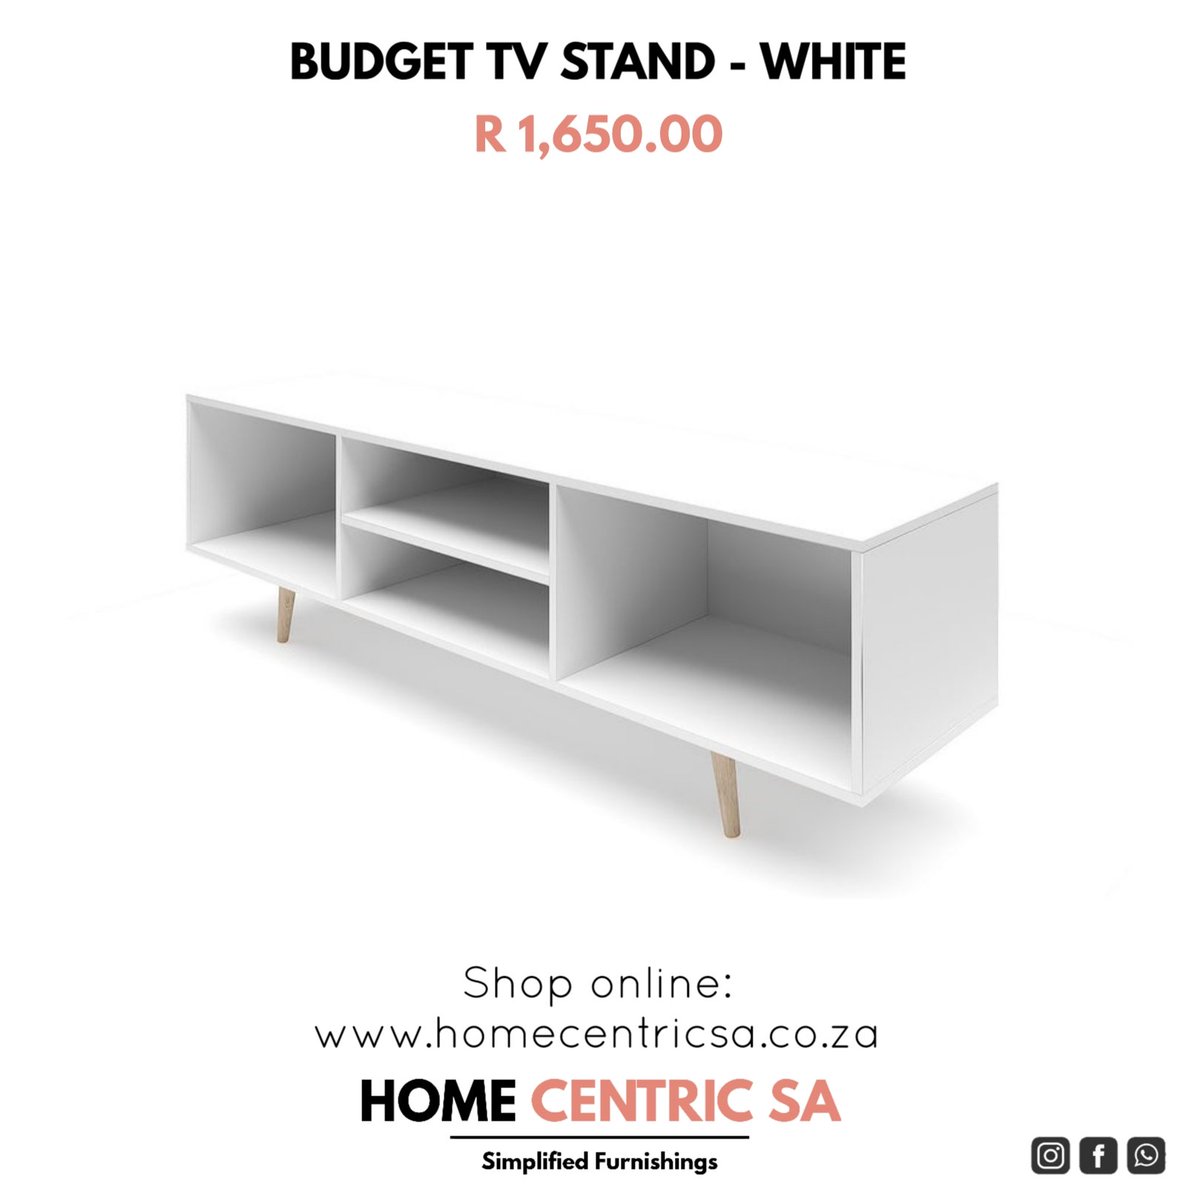 Shop online:
homecentricsa.co.za

#tvstand #tvcabinet #tvunit #tv #loungefurniture #loungedecor #furnituredesign #interiordecor #livingroom